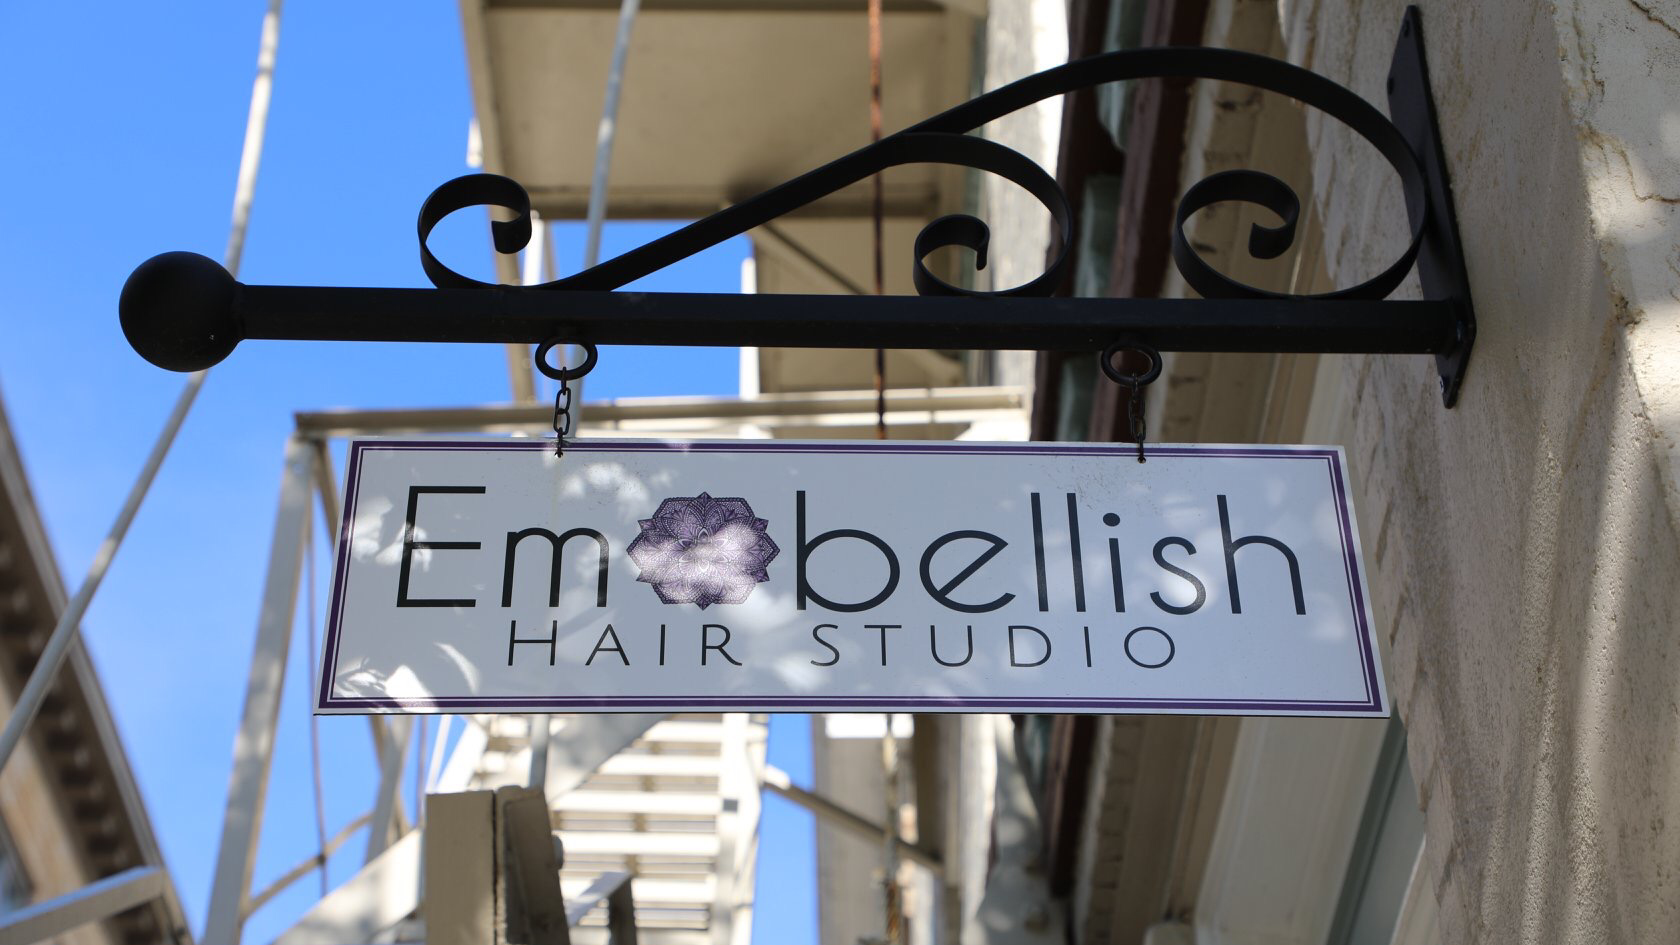 Embellish Hair Studio